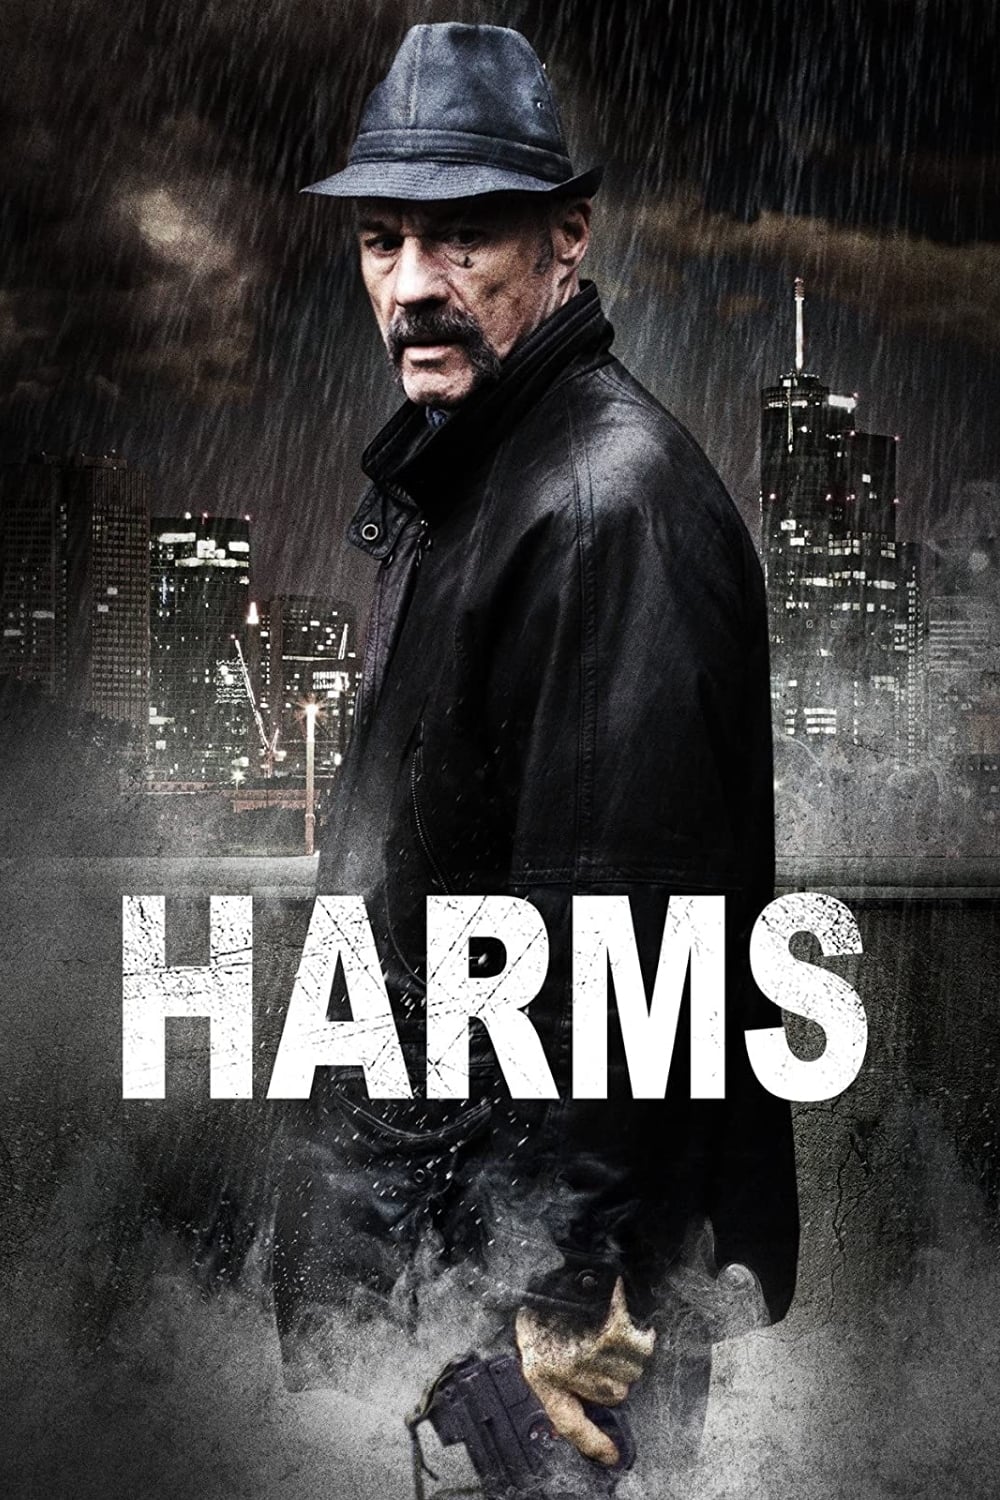 Harms (2013)